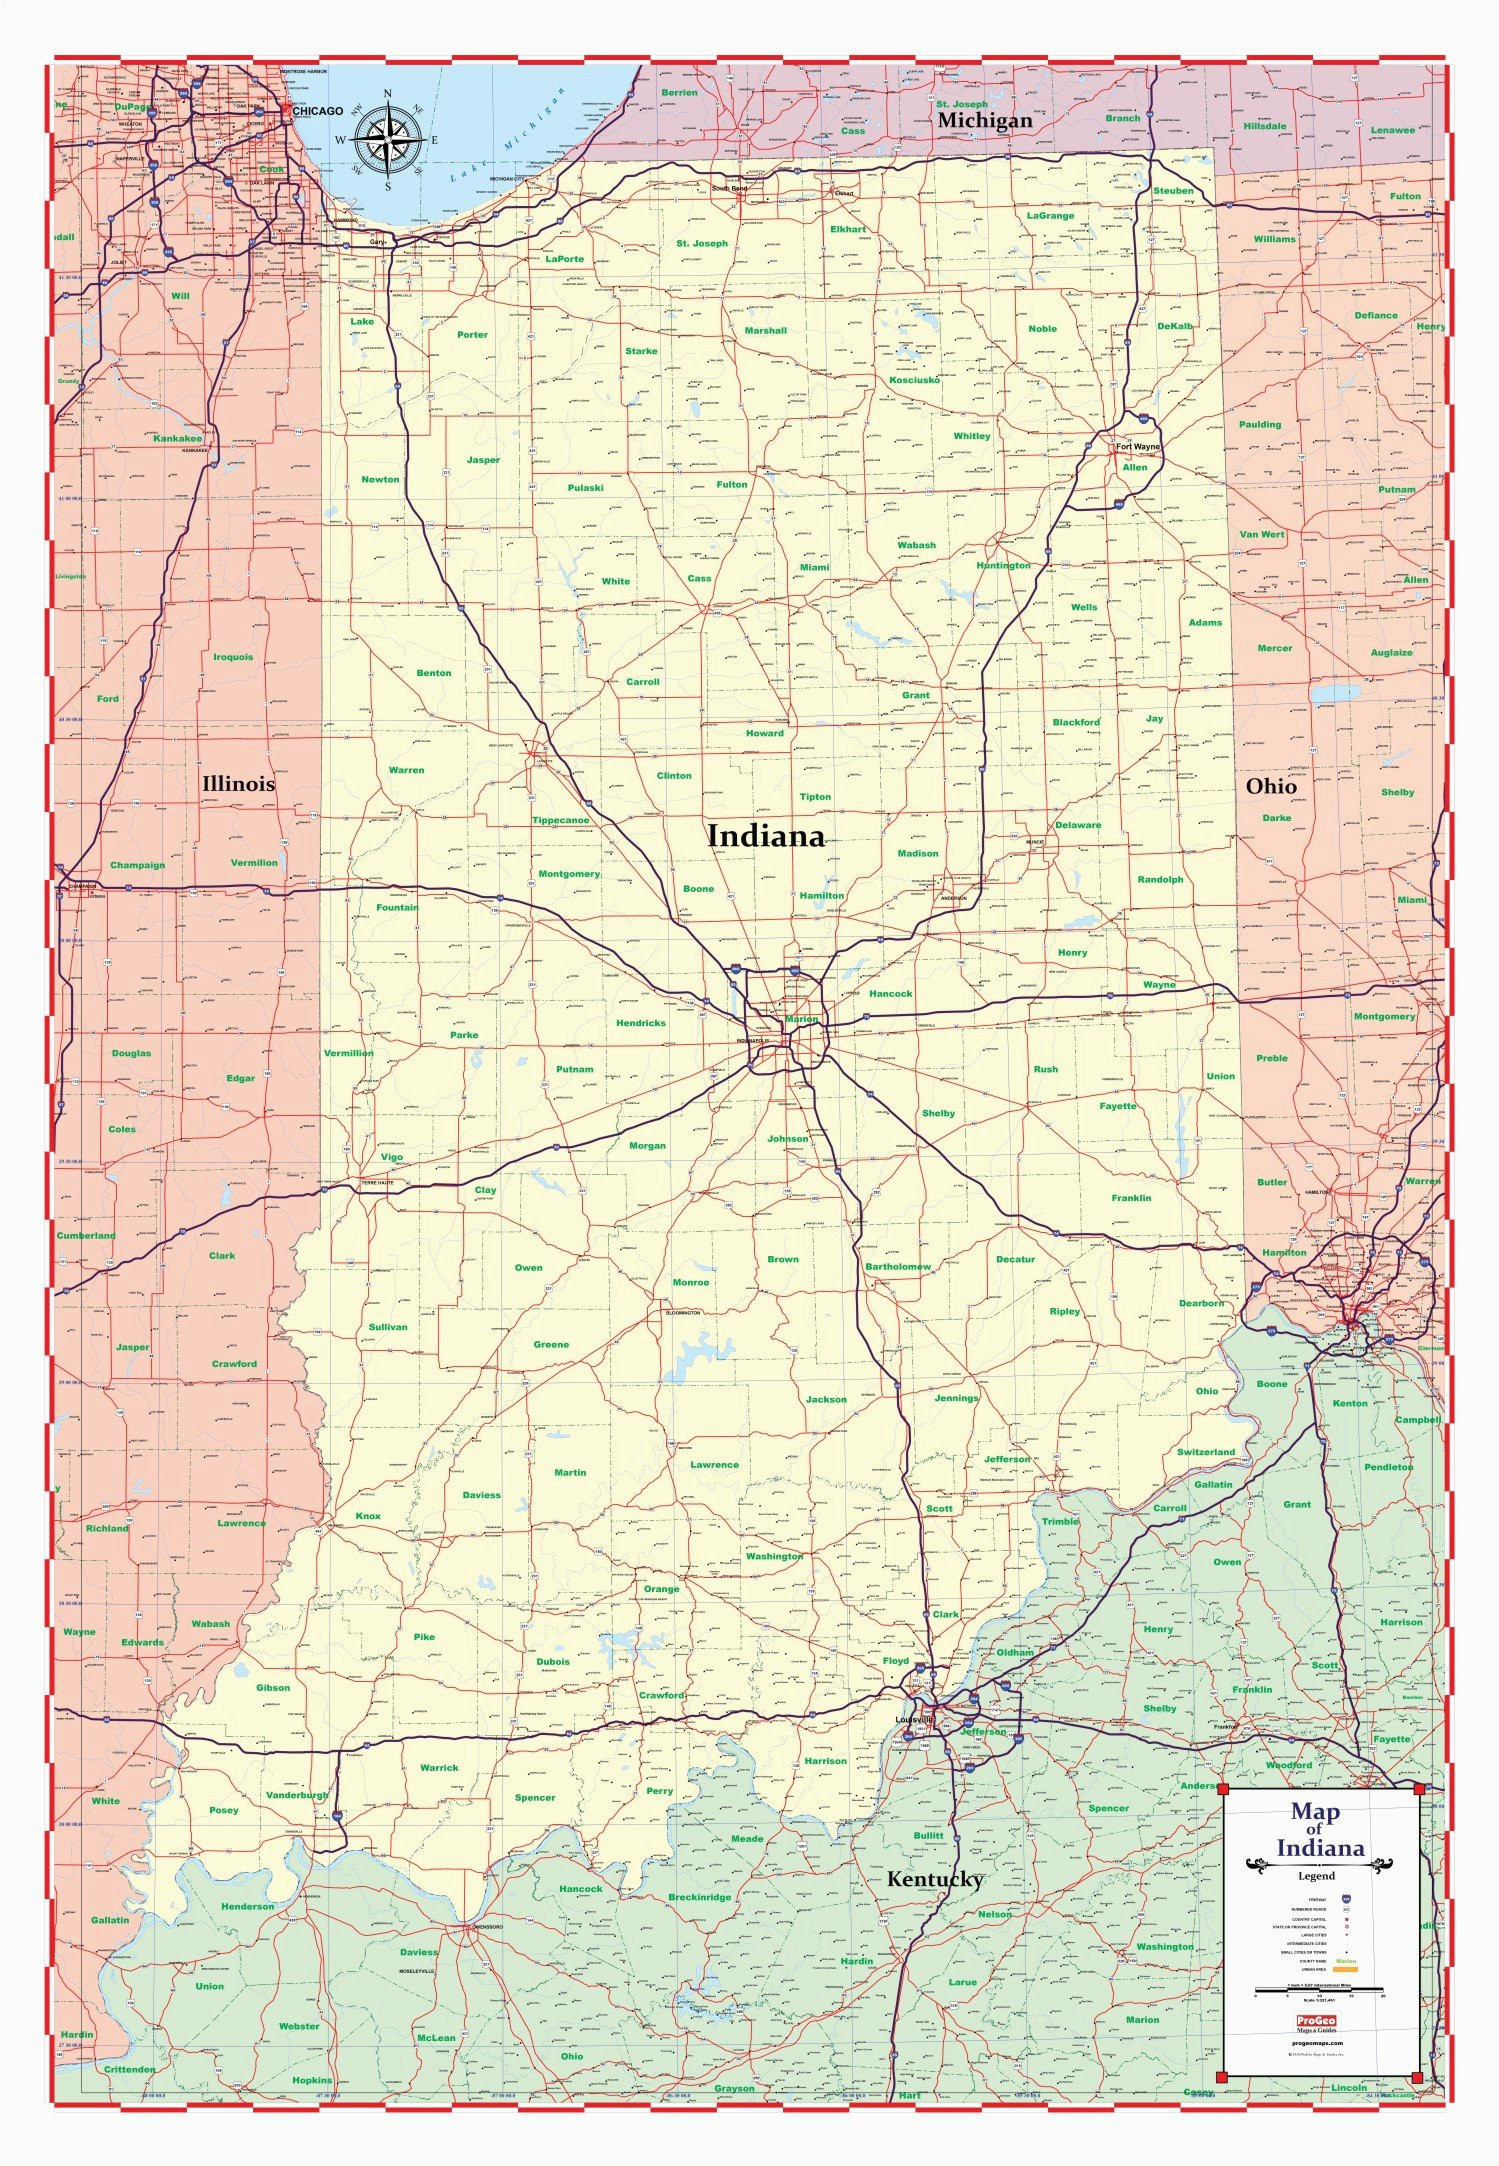 bellevue ohio county map new ohio county map printable new indiana